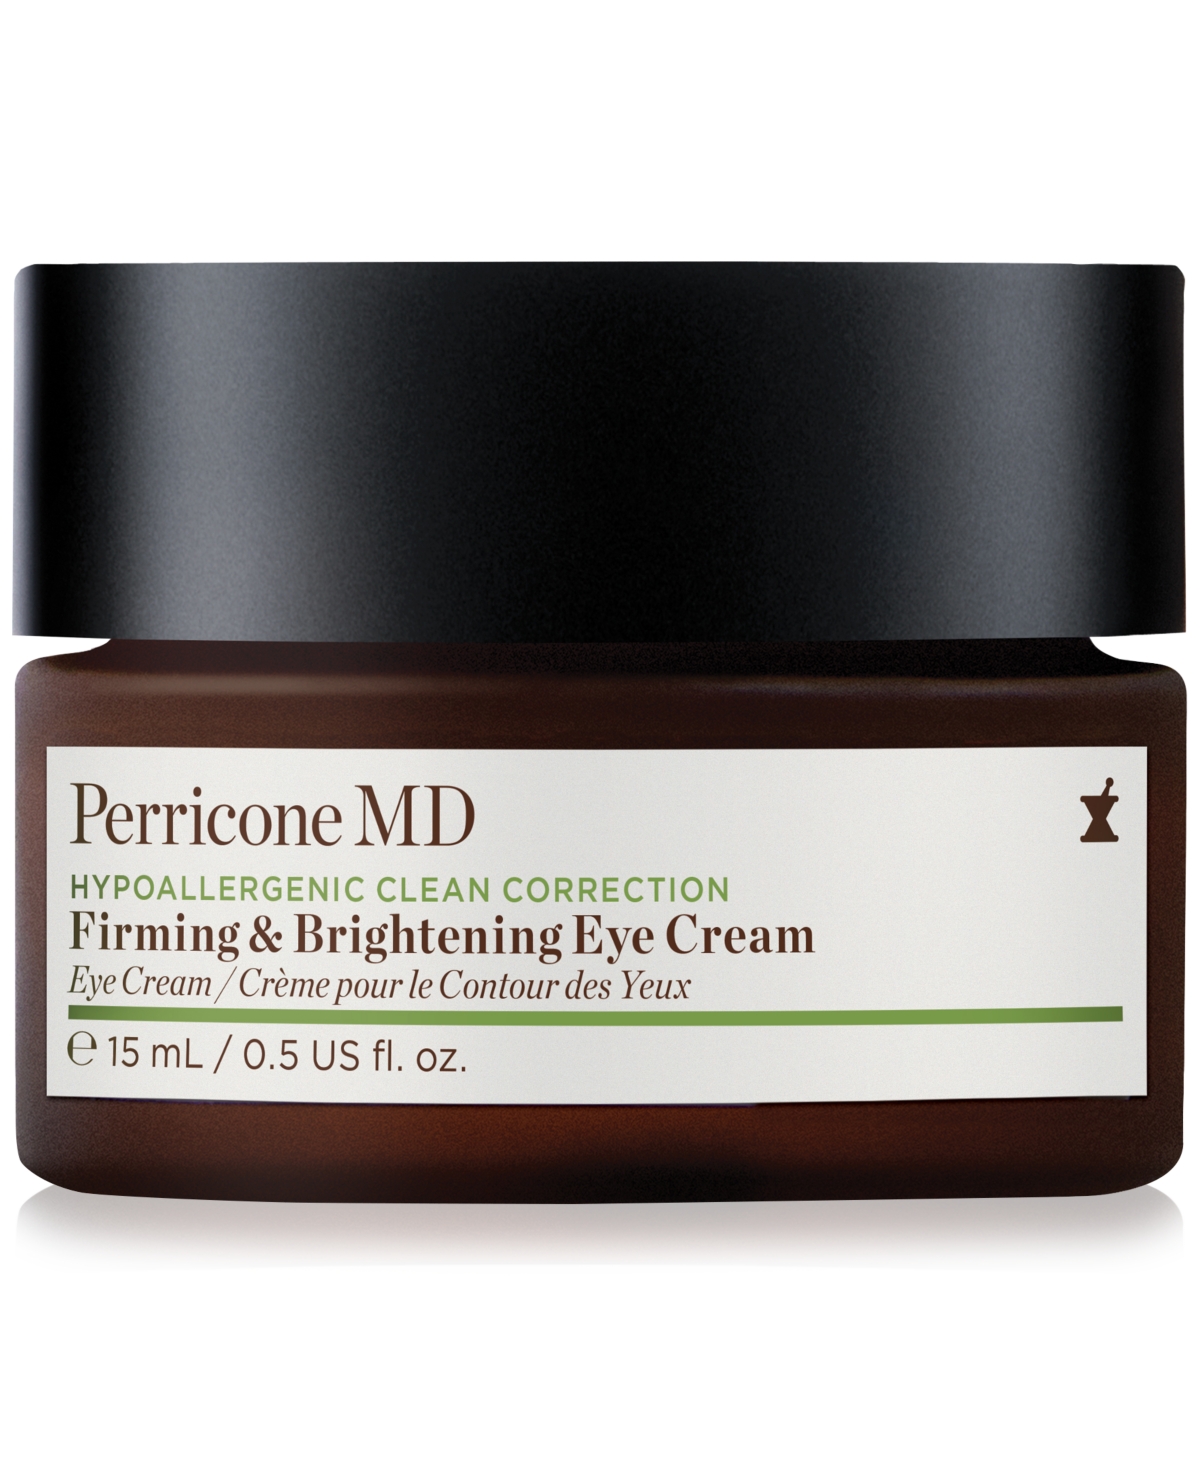 Firming & Brightening Eye Cream, 0.5 oz.